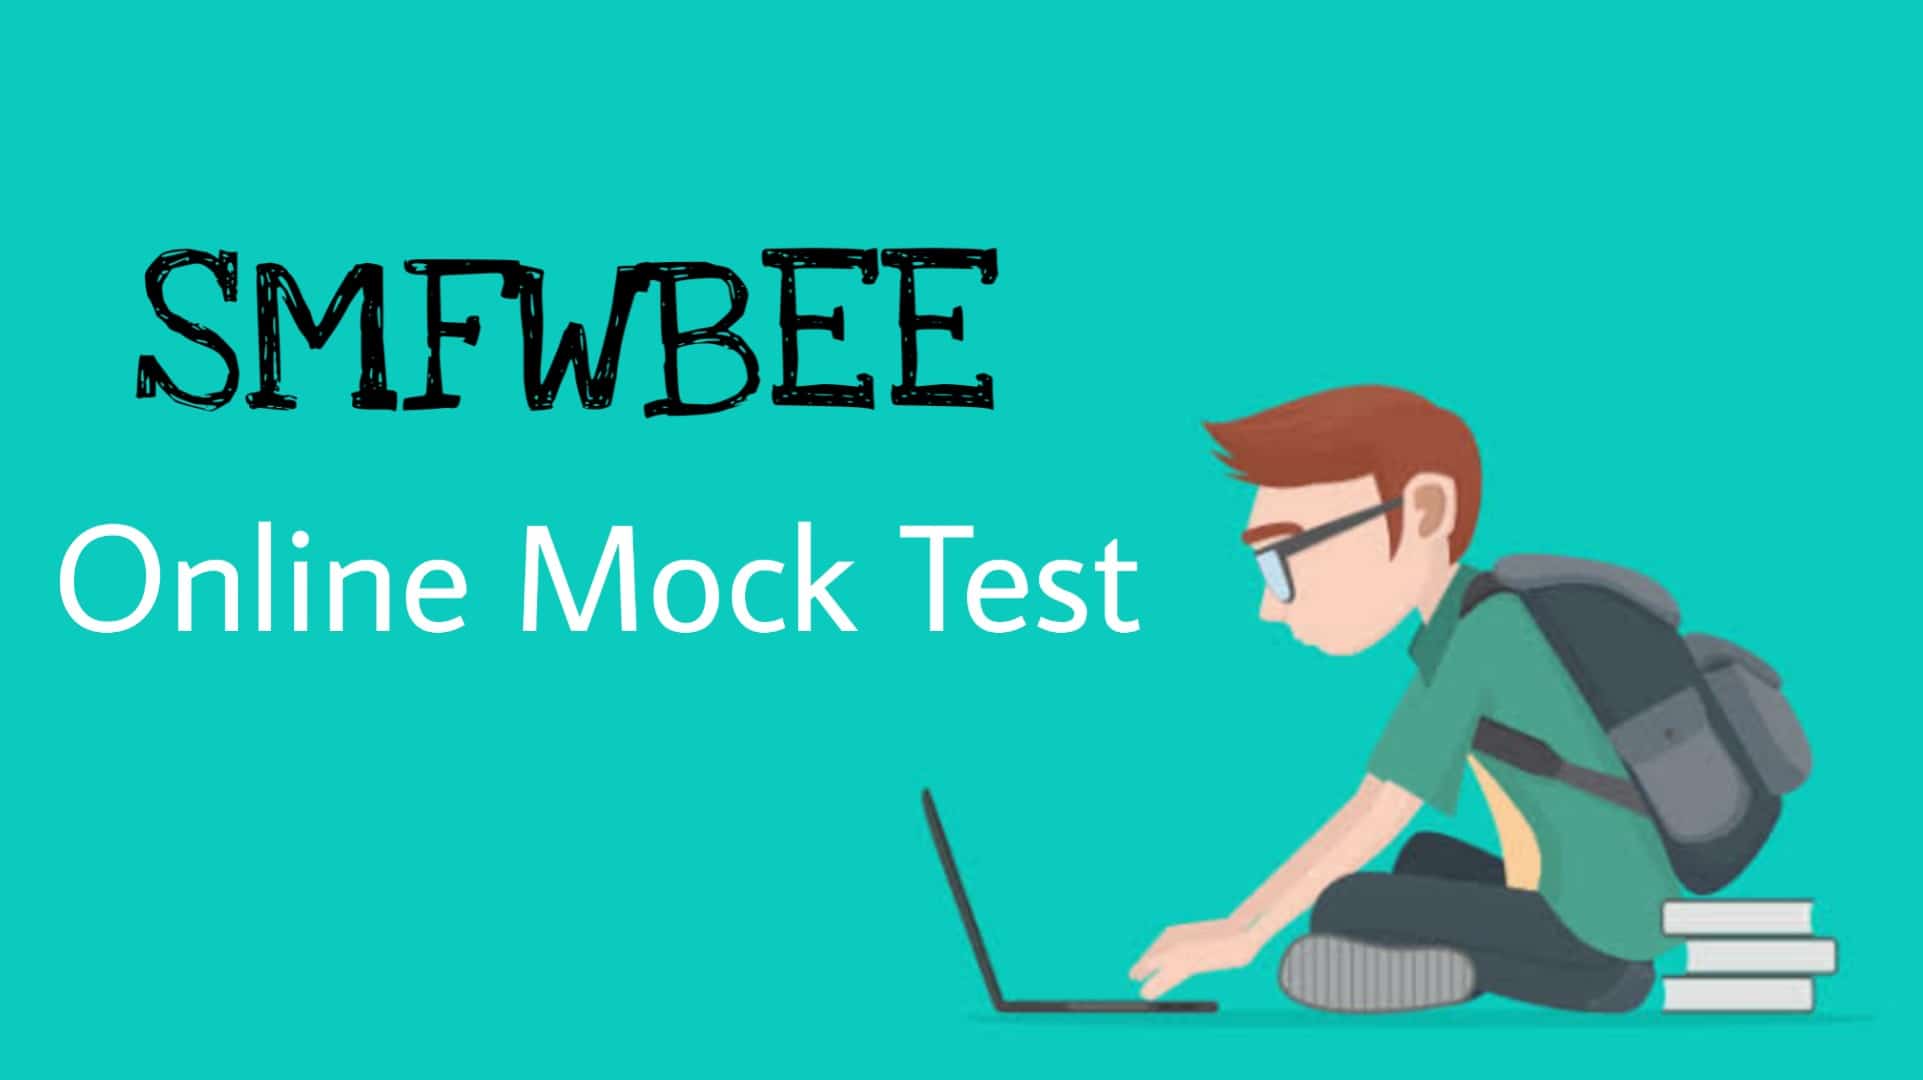 SMFWBEE Online Mock Test